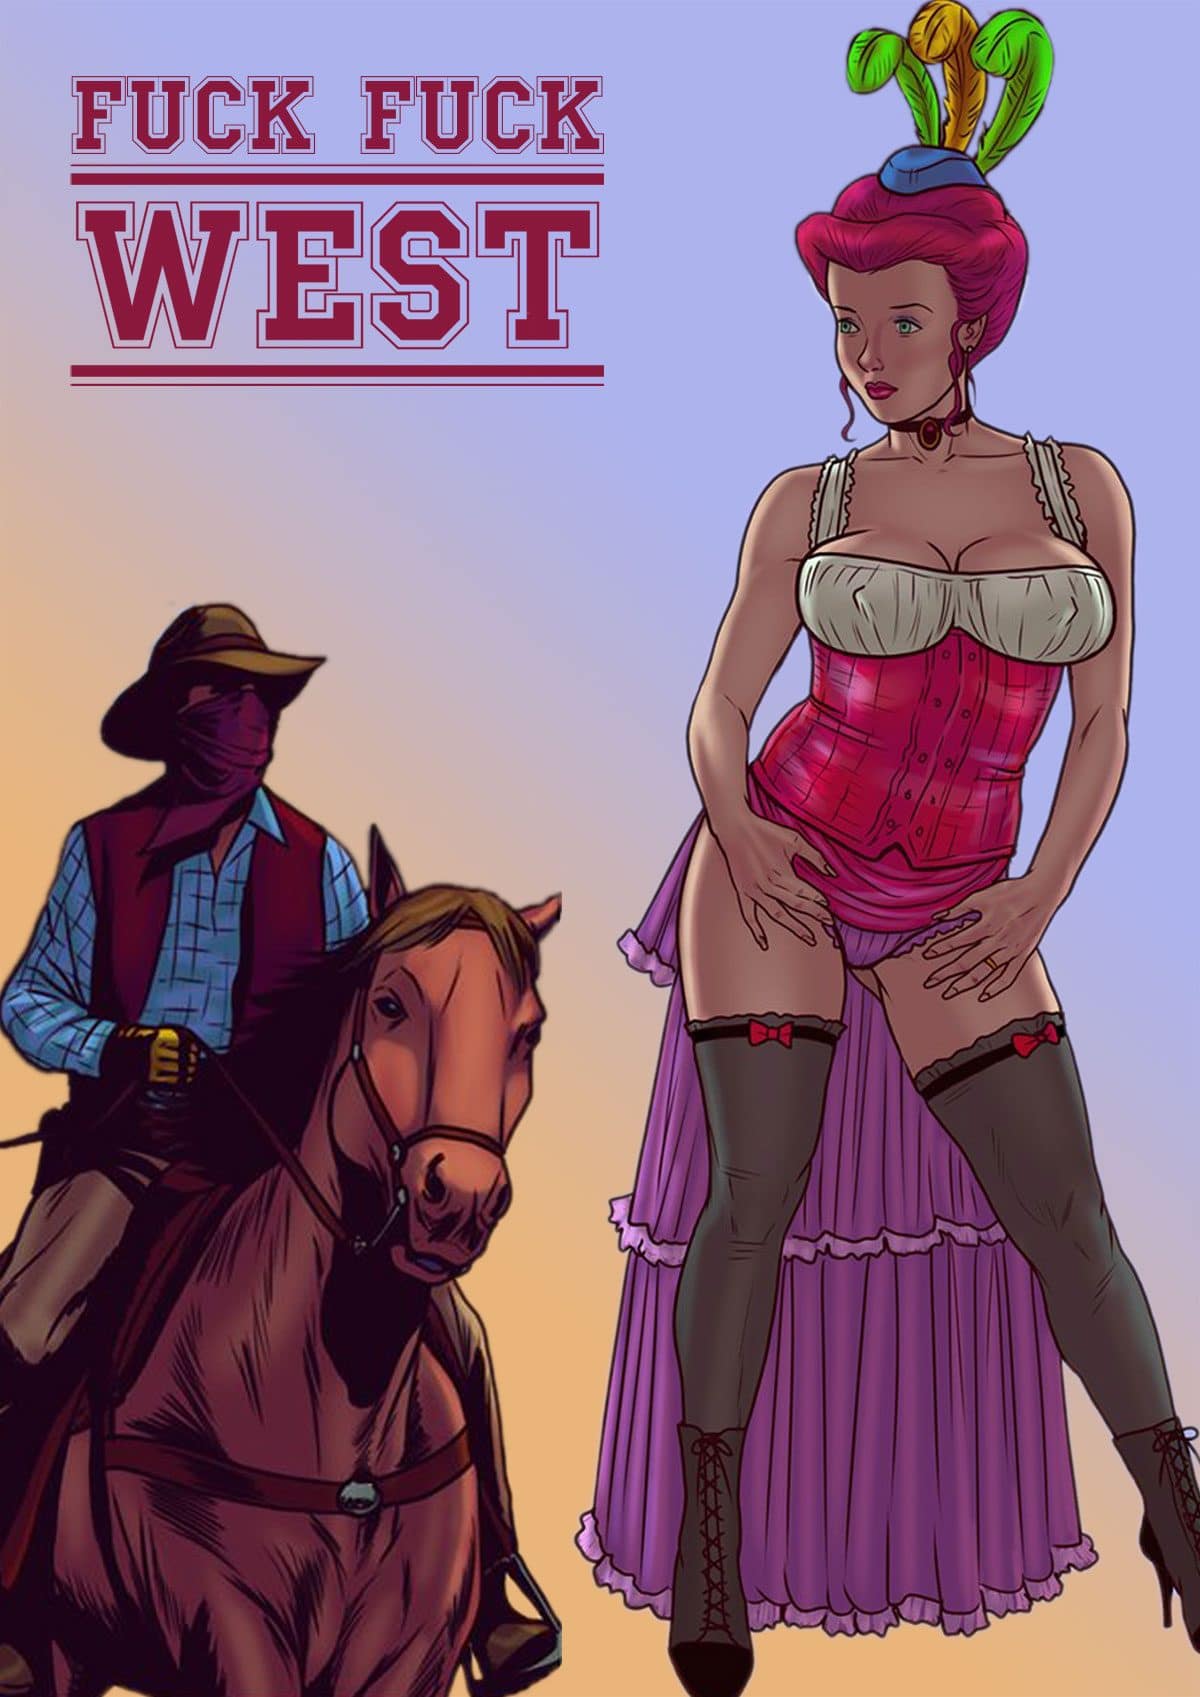 Milftoon comic "Fuck Fuck West"